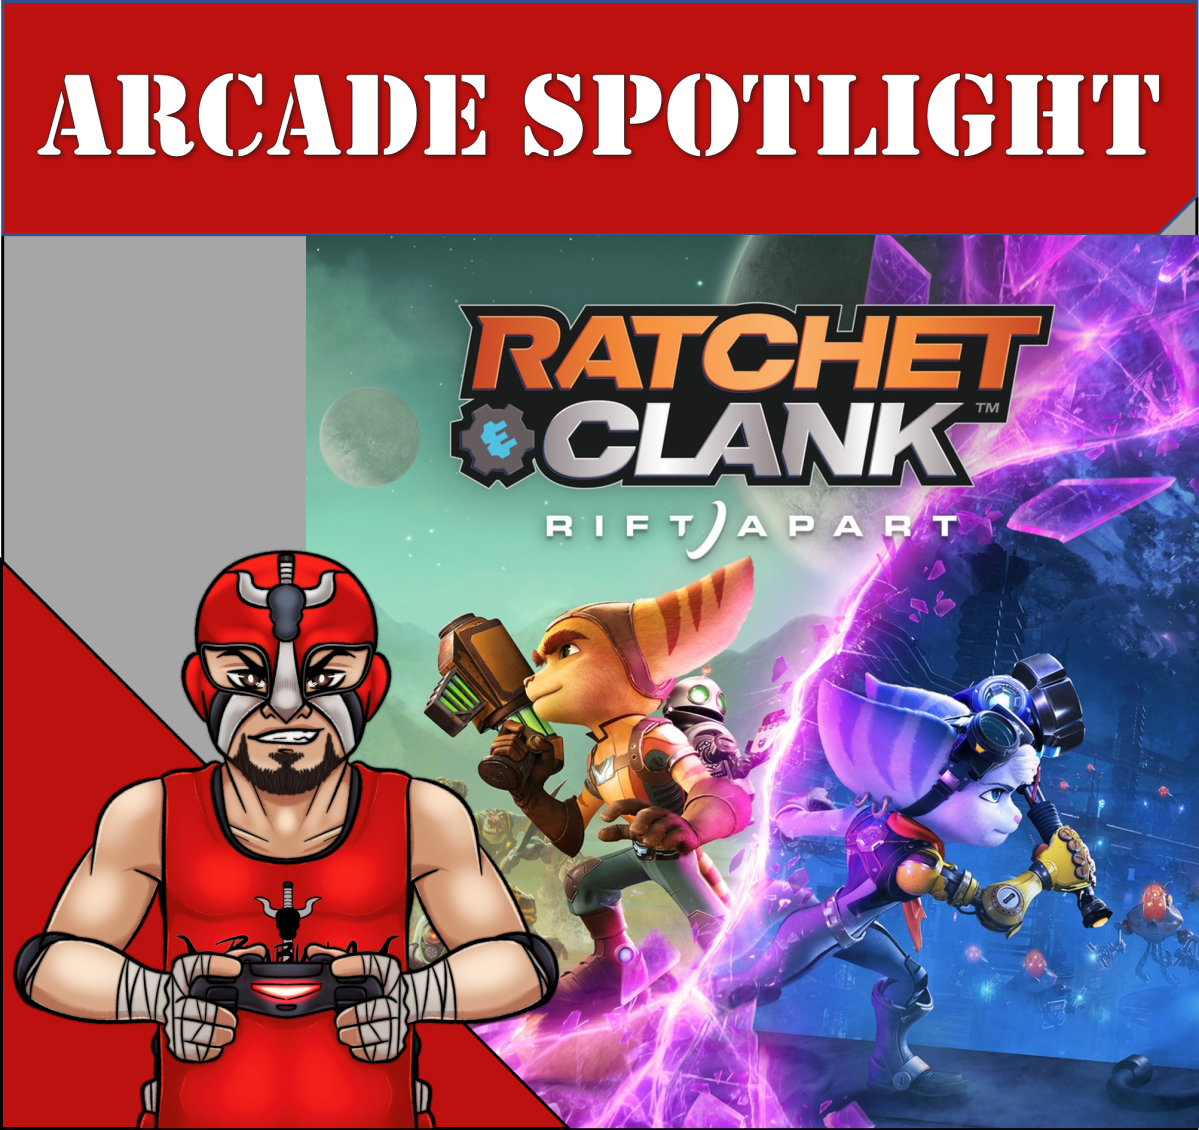 Arcade Spotlight! Ratchet & Clank: Rift Apart